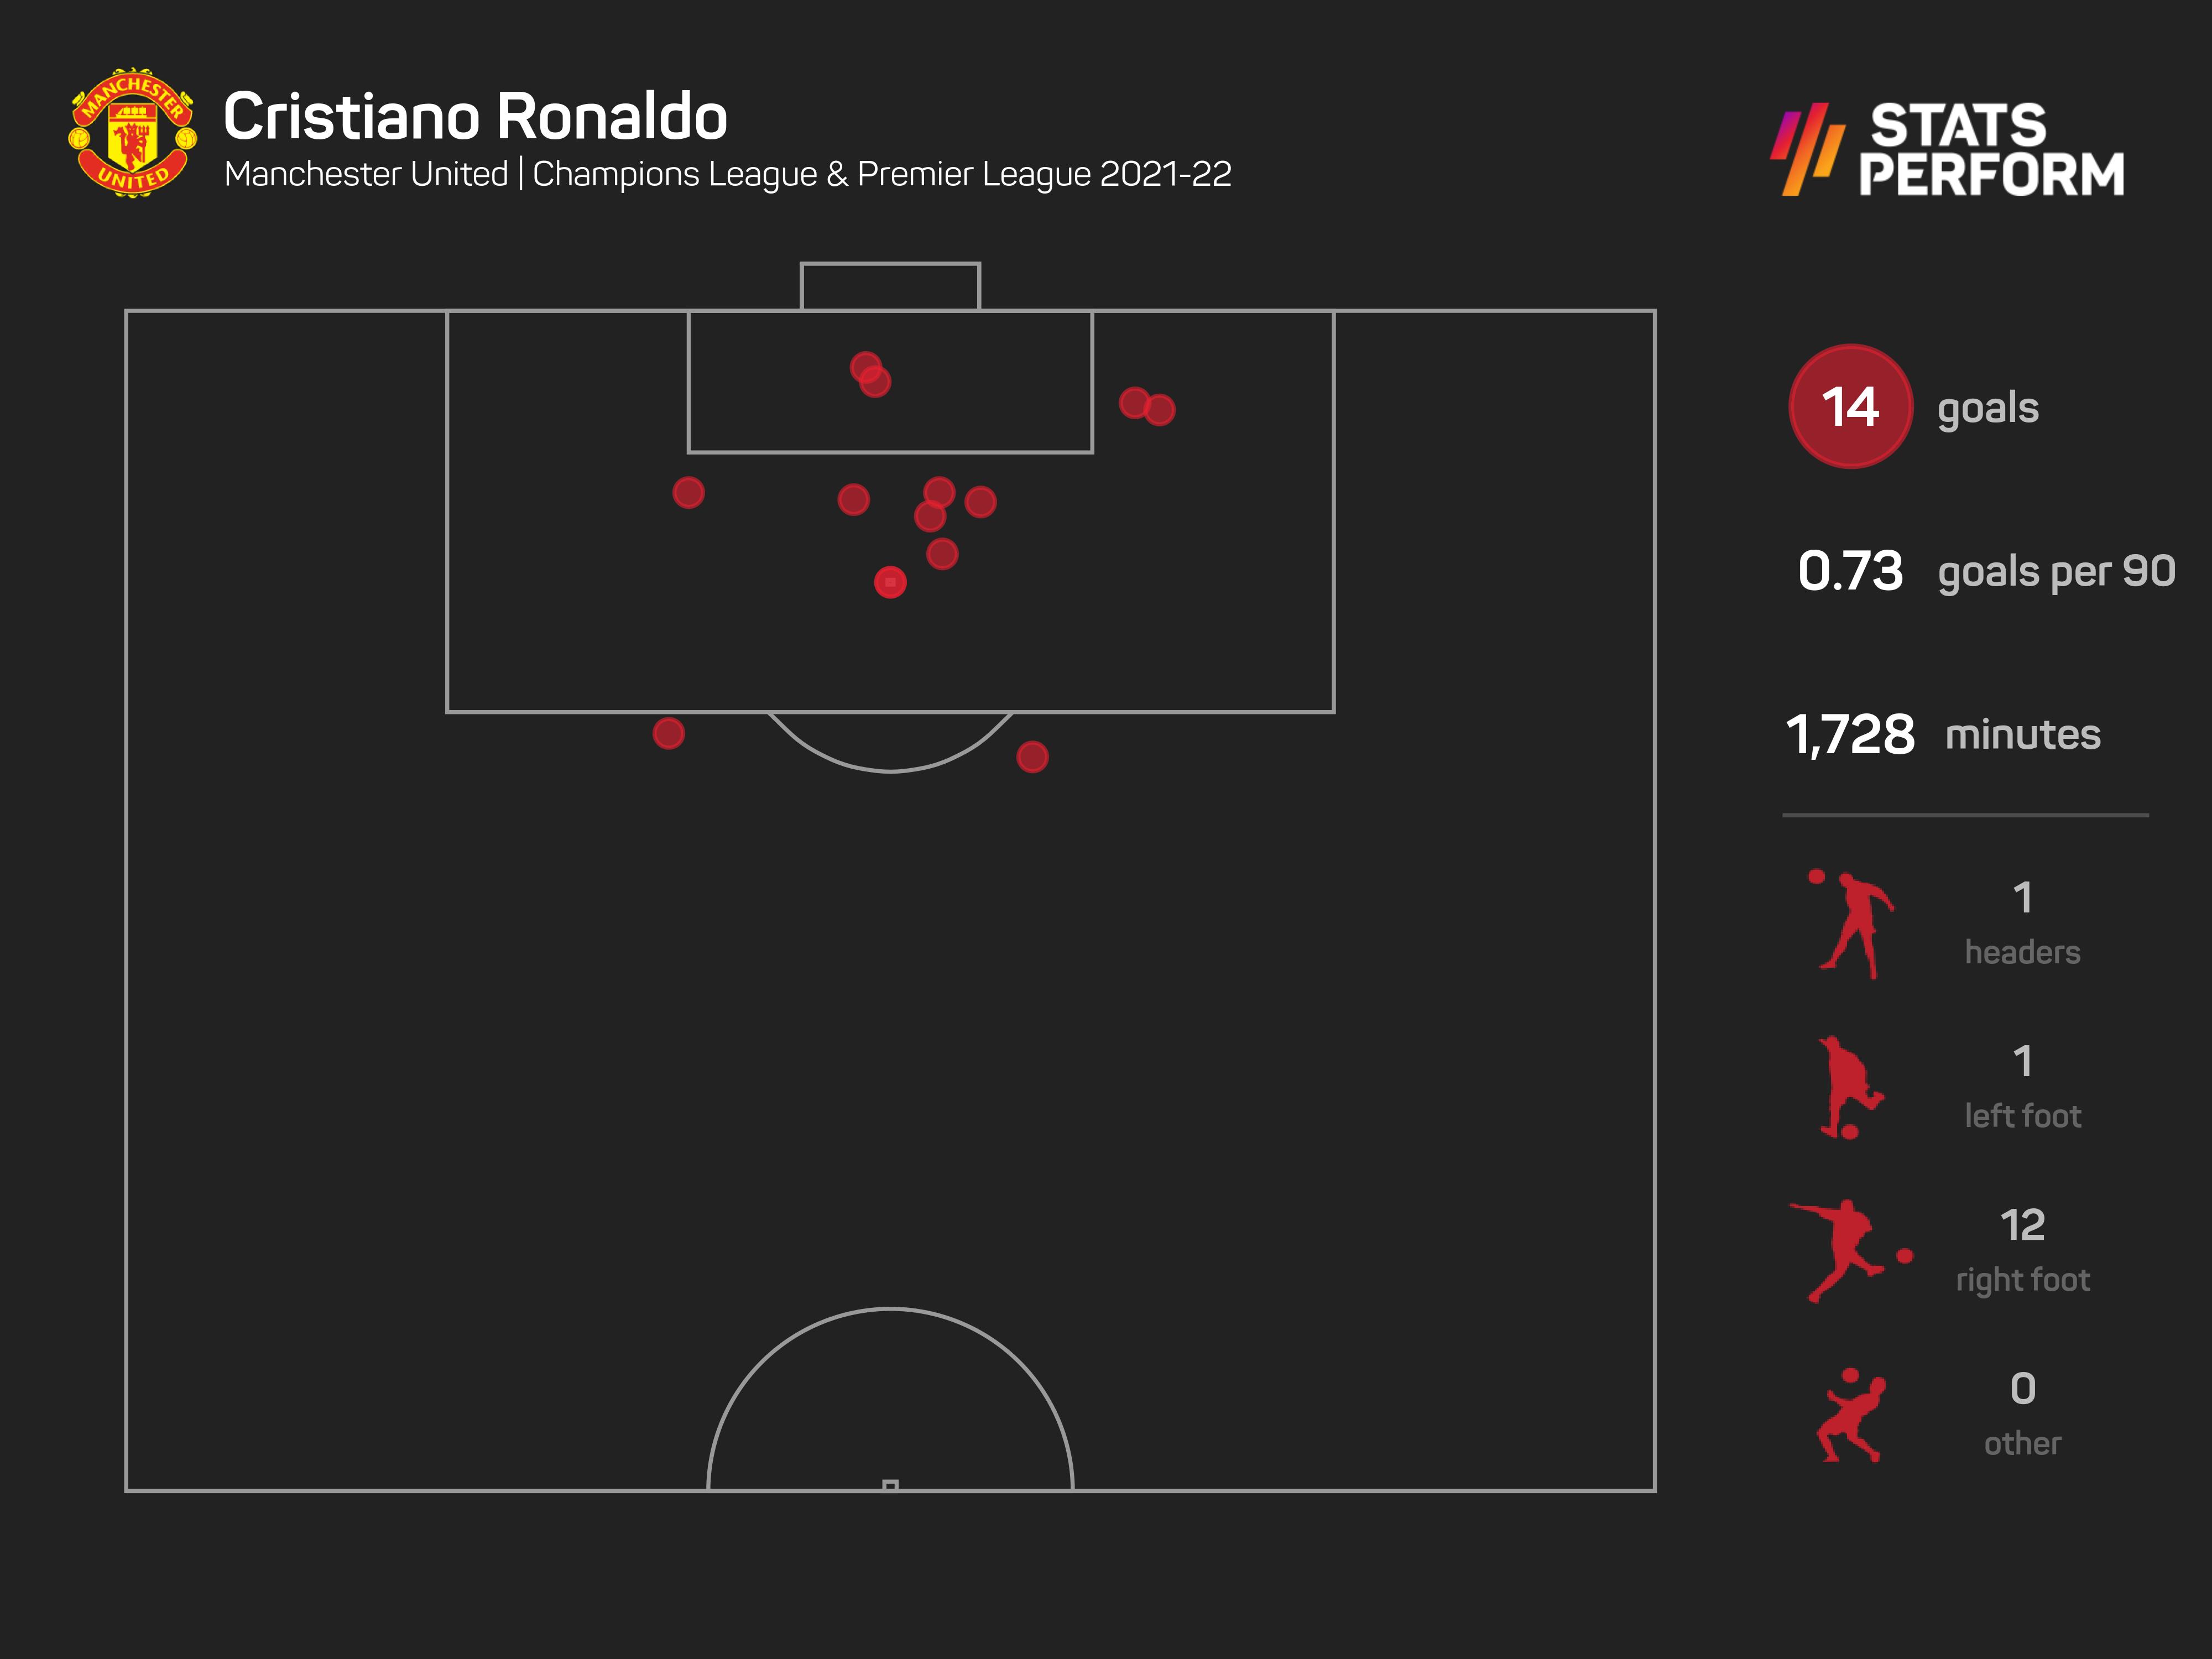 Cristiano Ronaldo has 14 goals for Manchester United this season